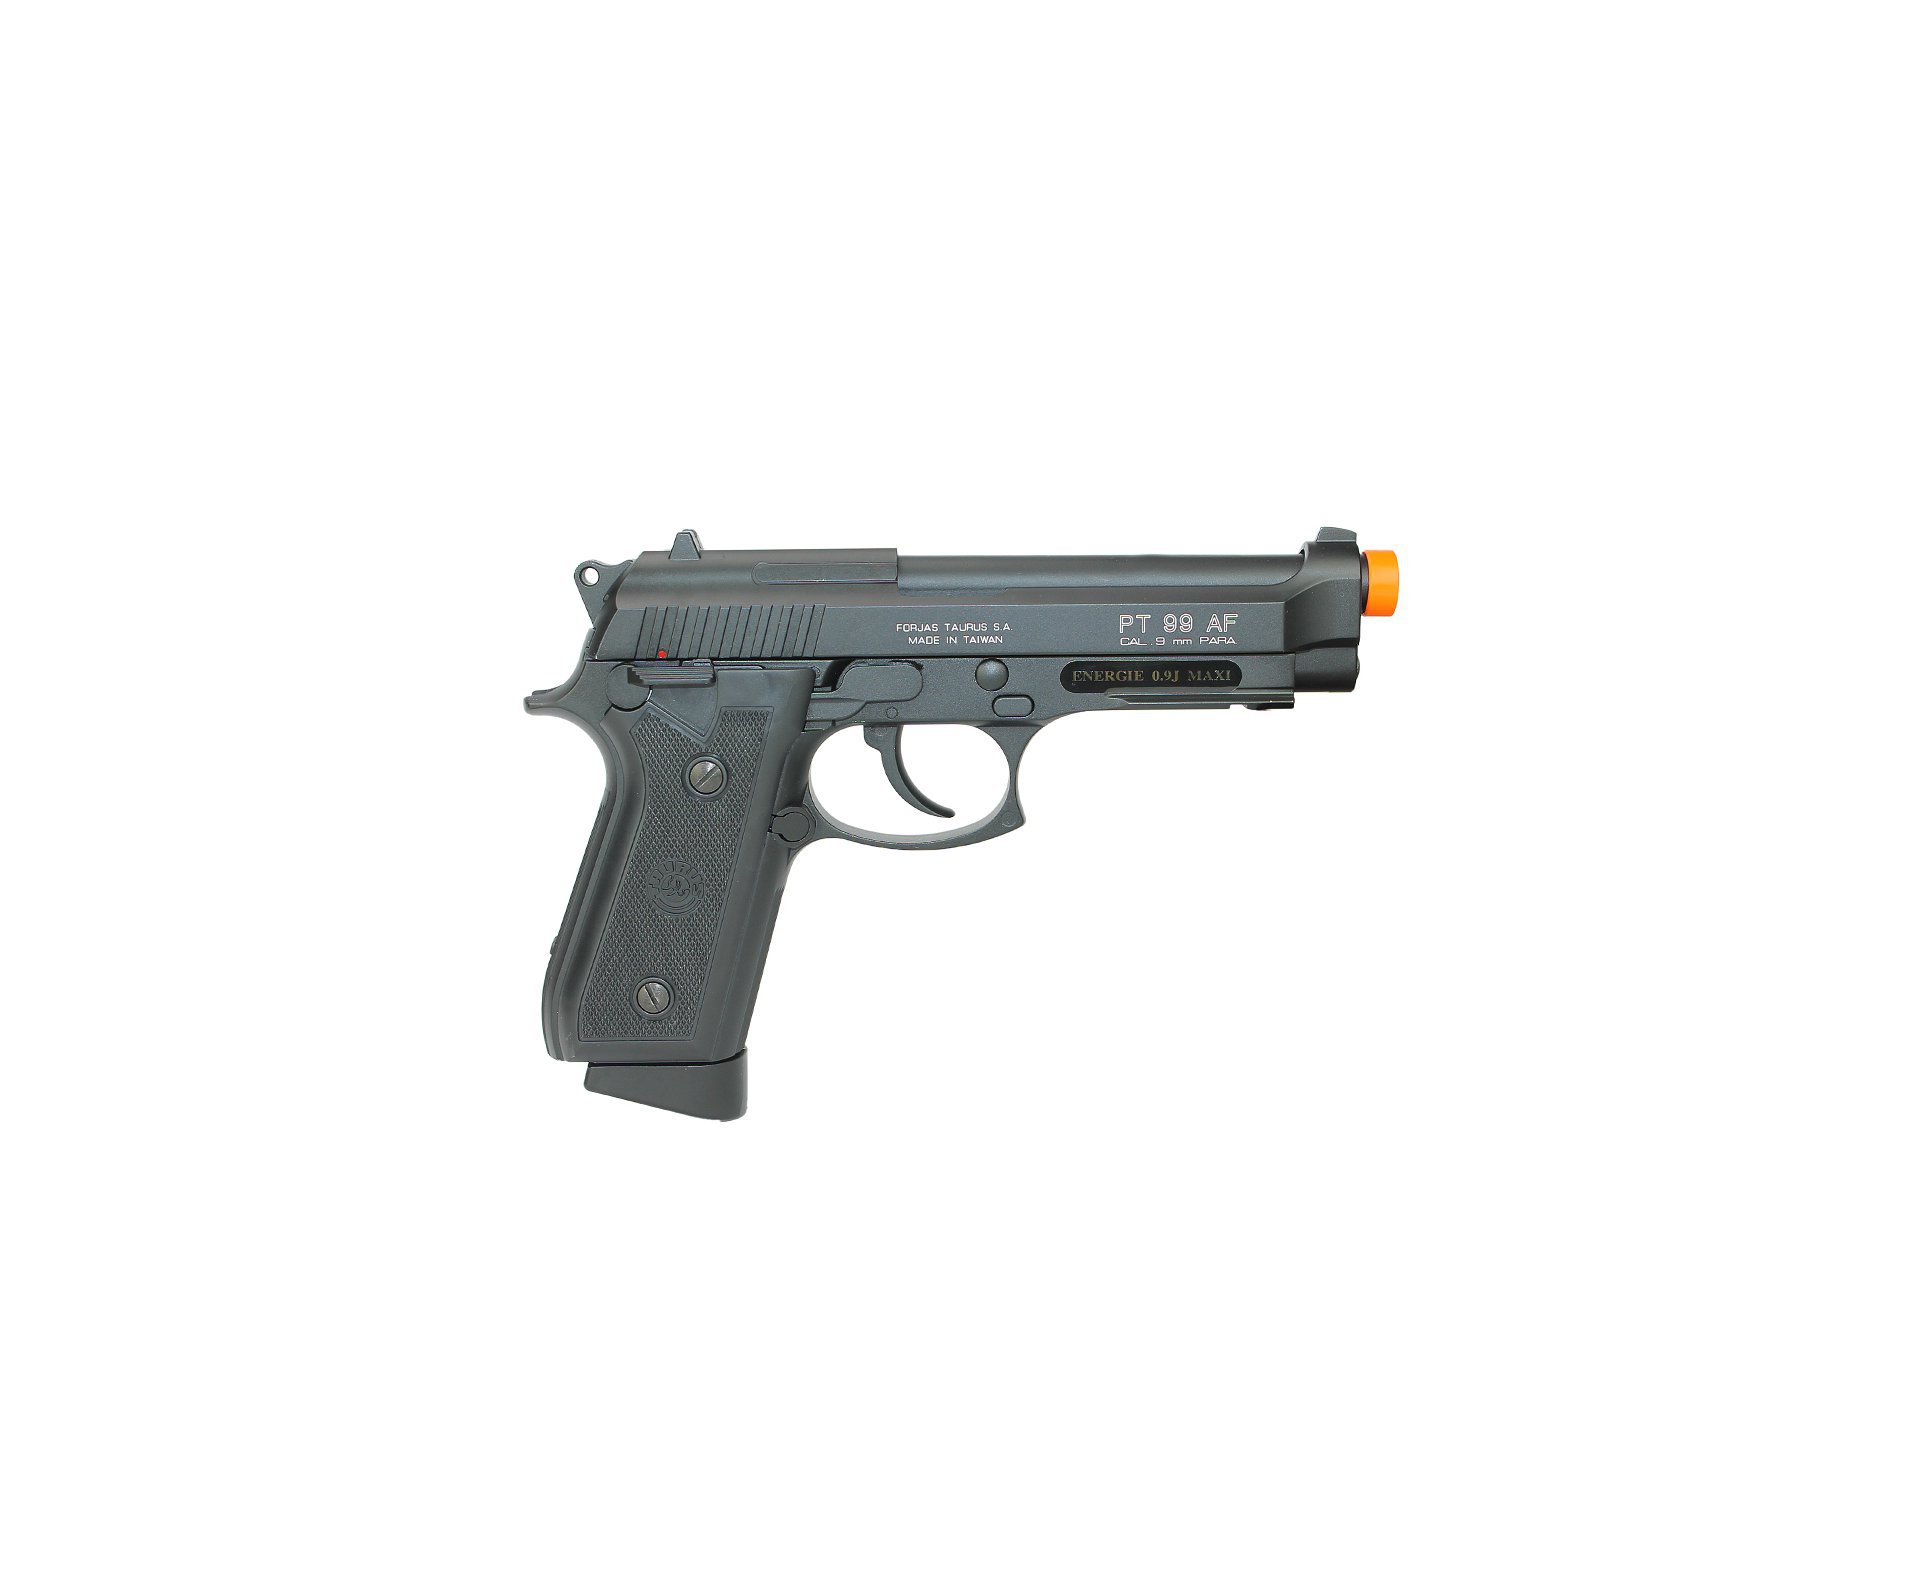 Pistola Airsoft Gas Co2 Taurus Pt99 Full Metal Blowback 6mm - Cybergun